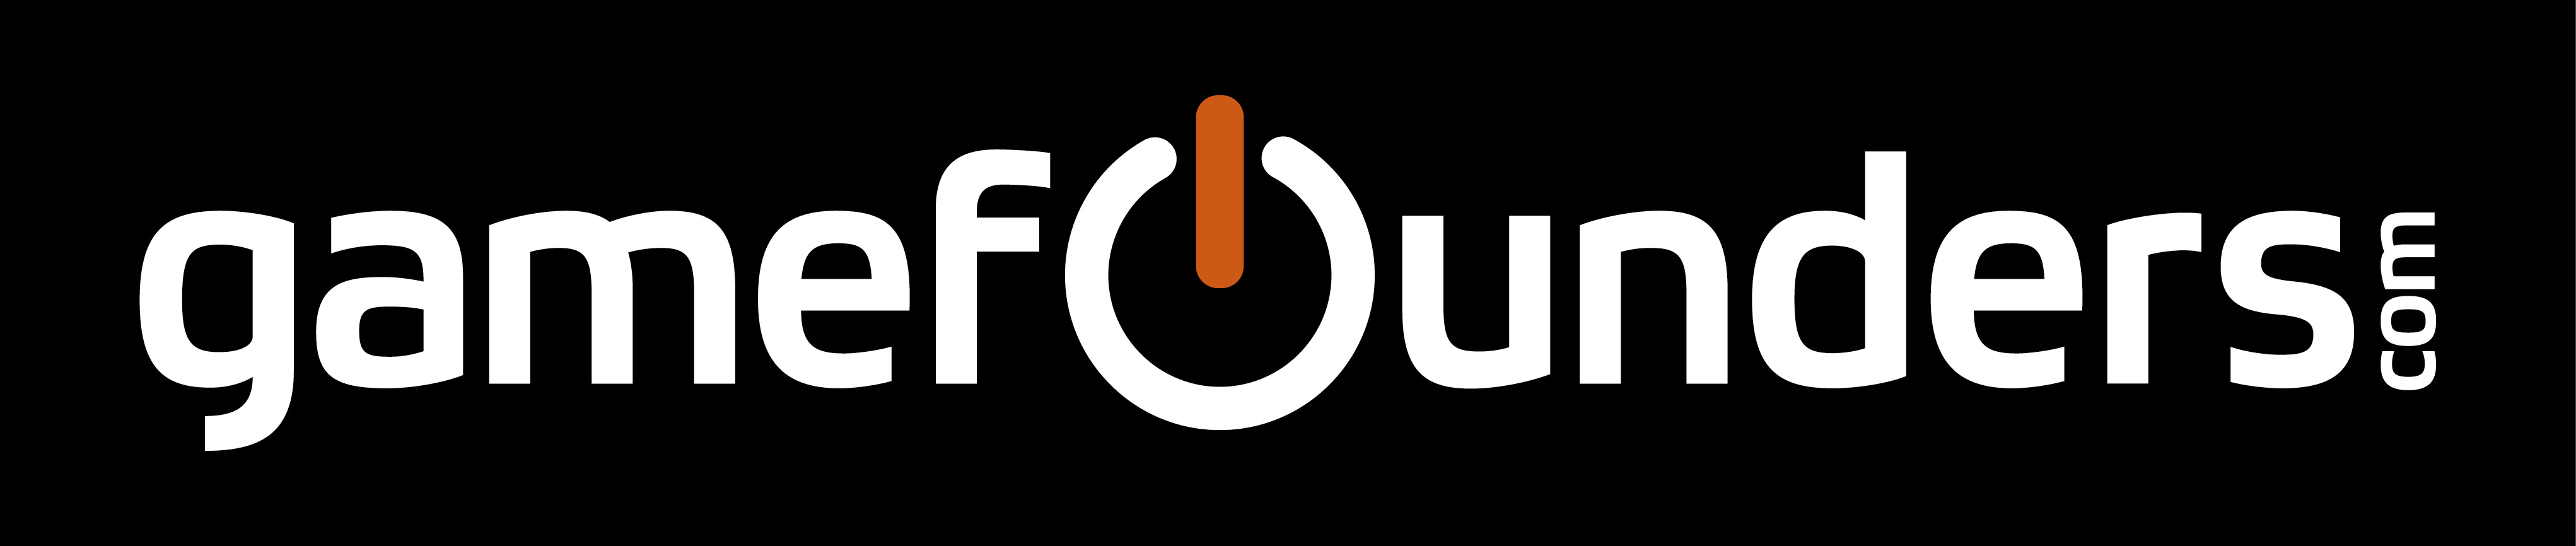 Gamefounders_logo4